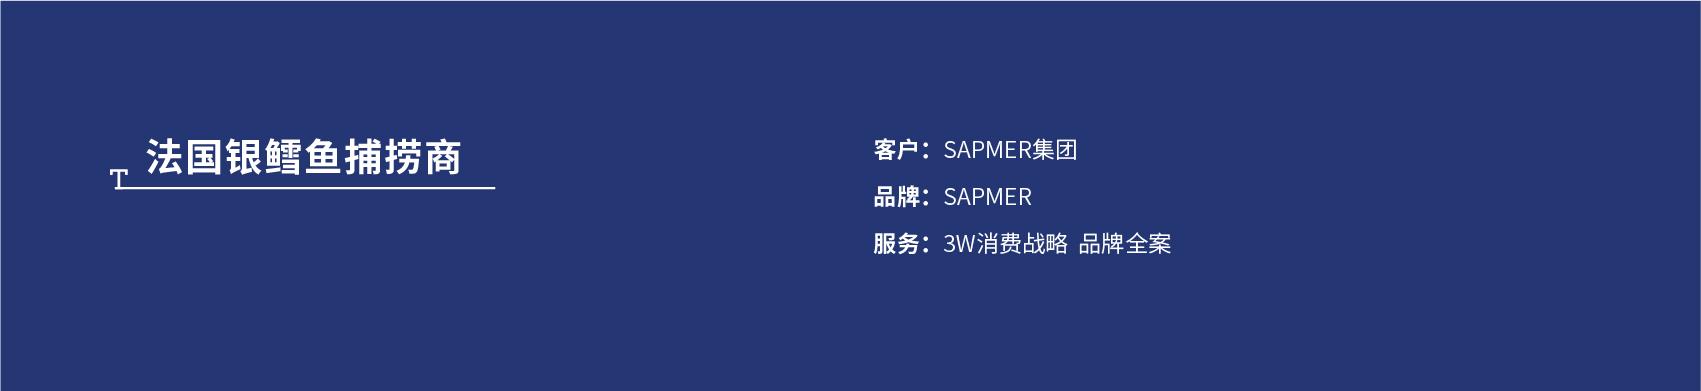 sapmer-头部-03.jpg